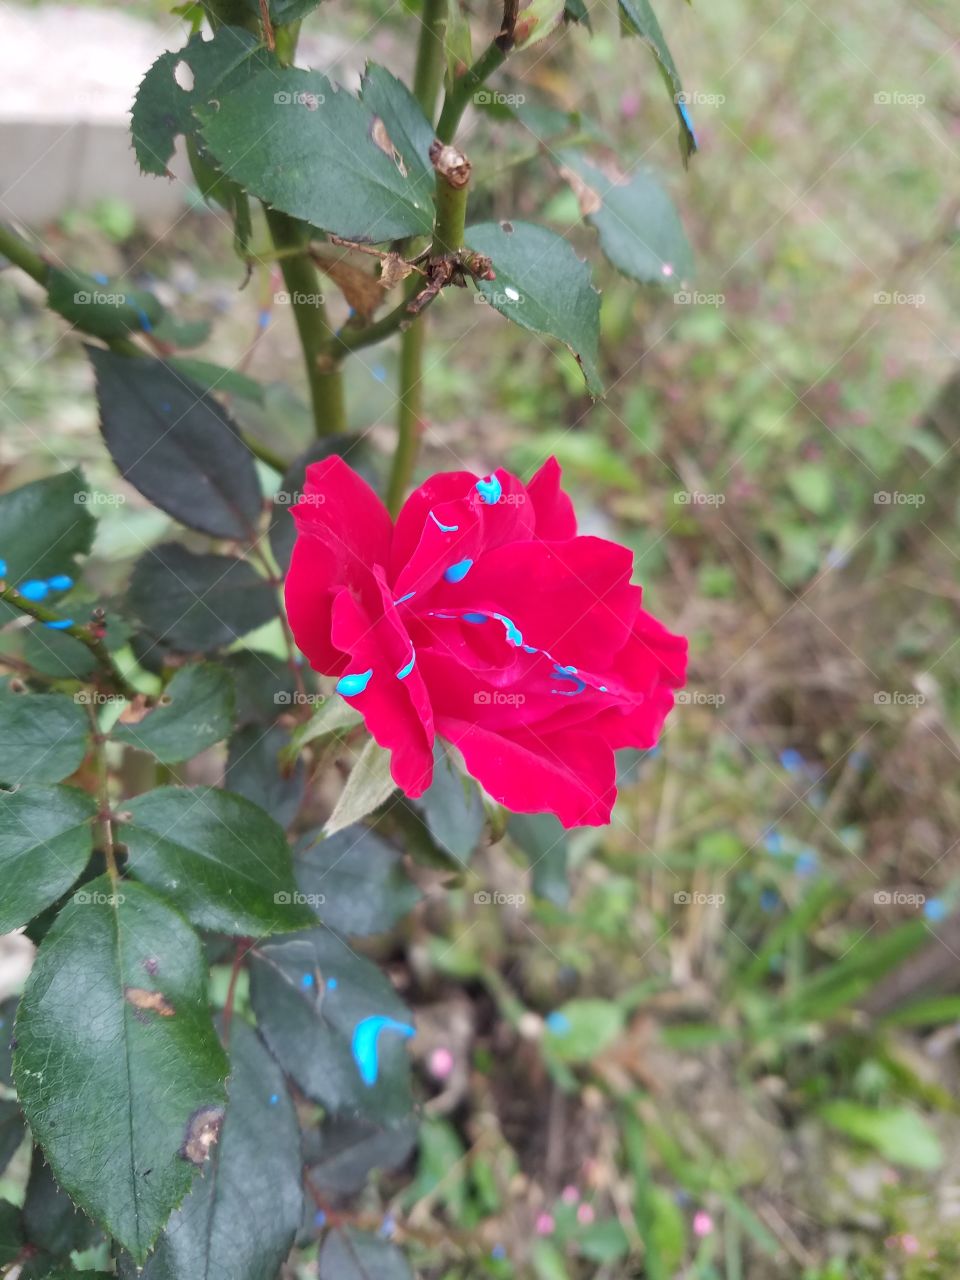 Blue Paint on Rose